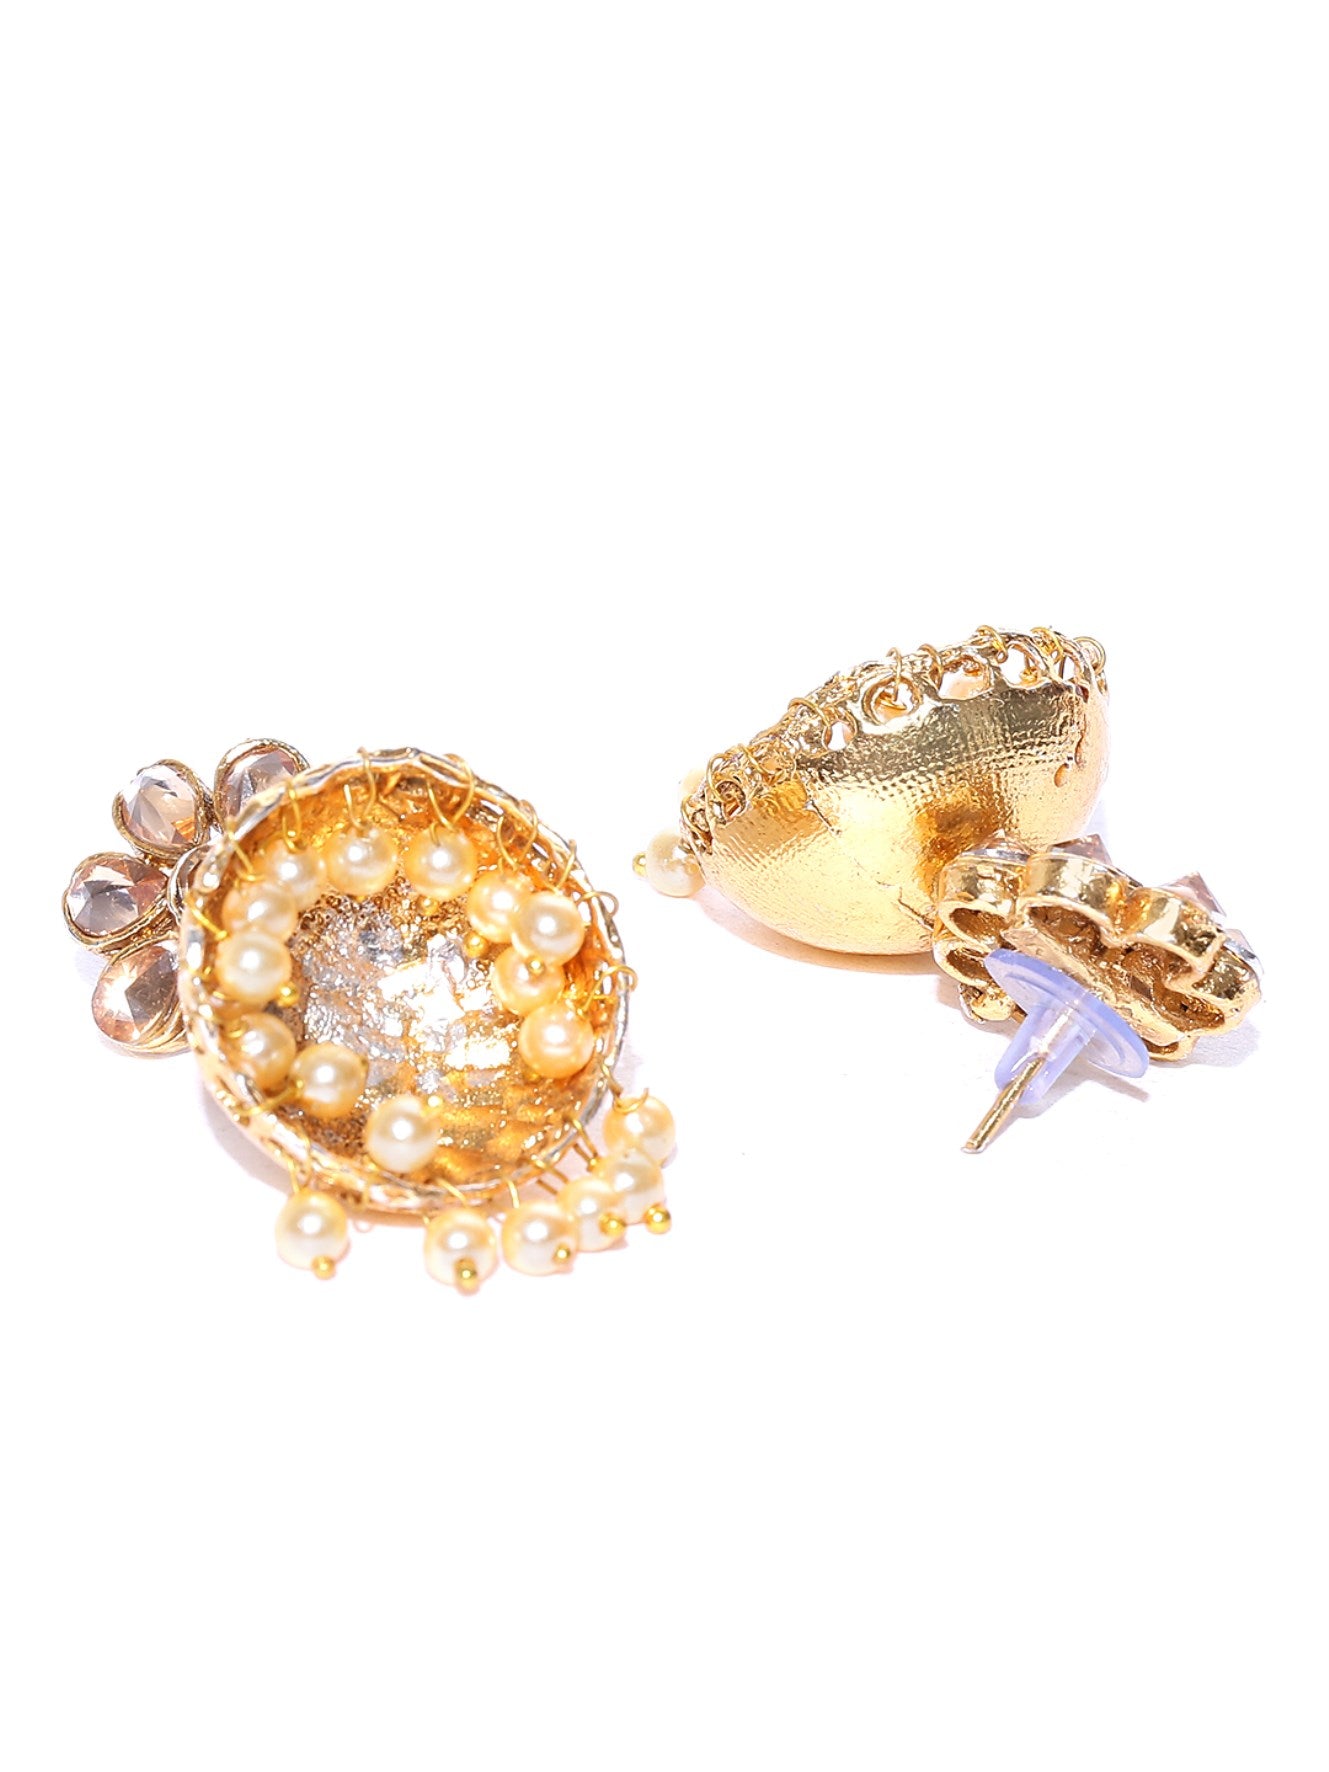 Flower Earrings Small Stud for Girls by FashionCrab® - FashionCrab.us